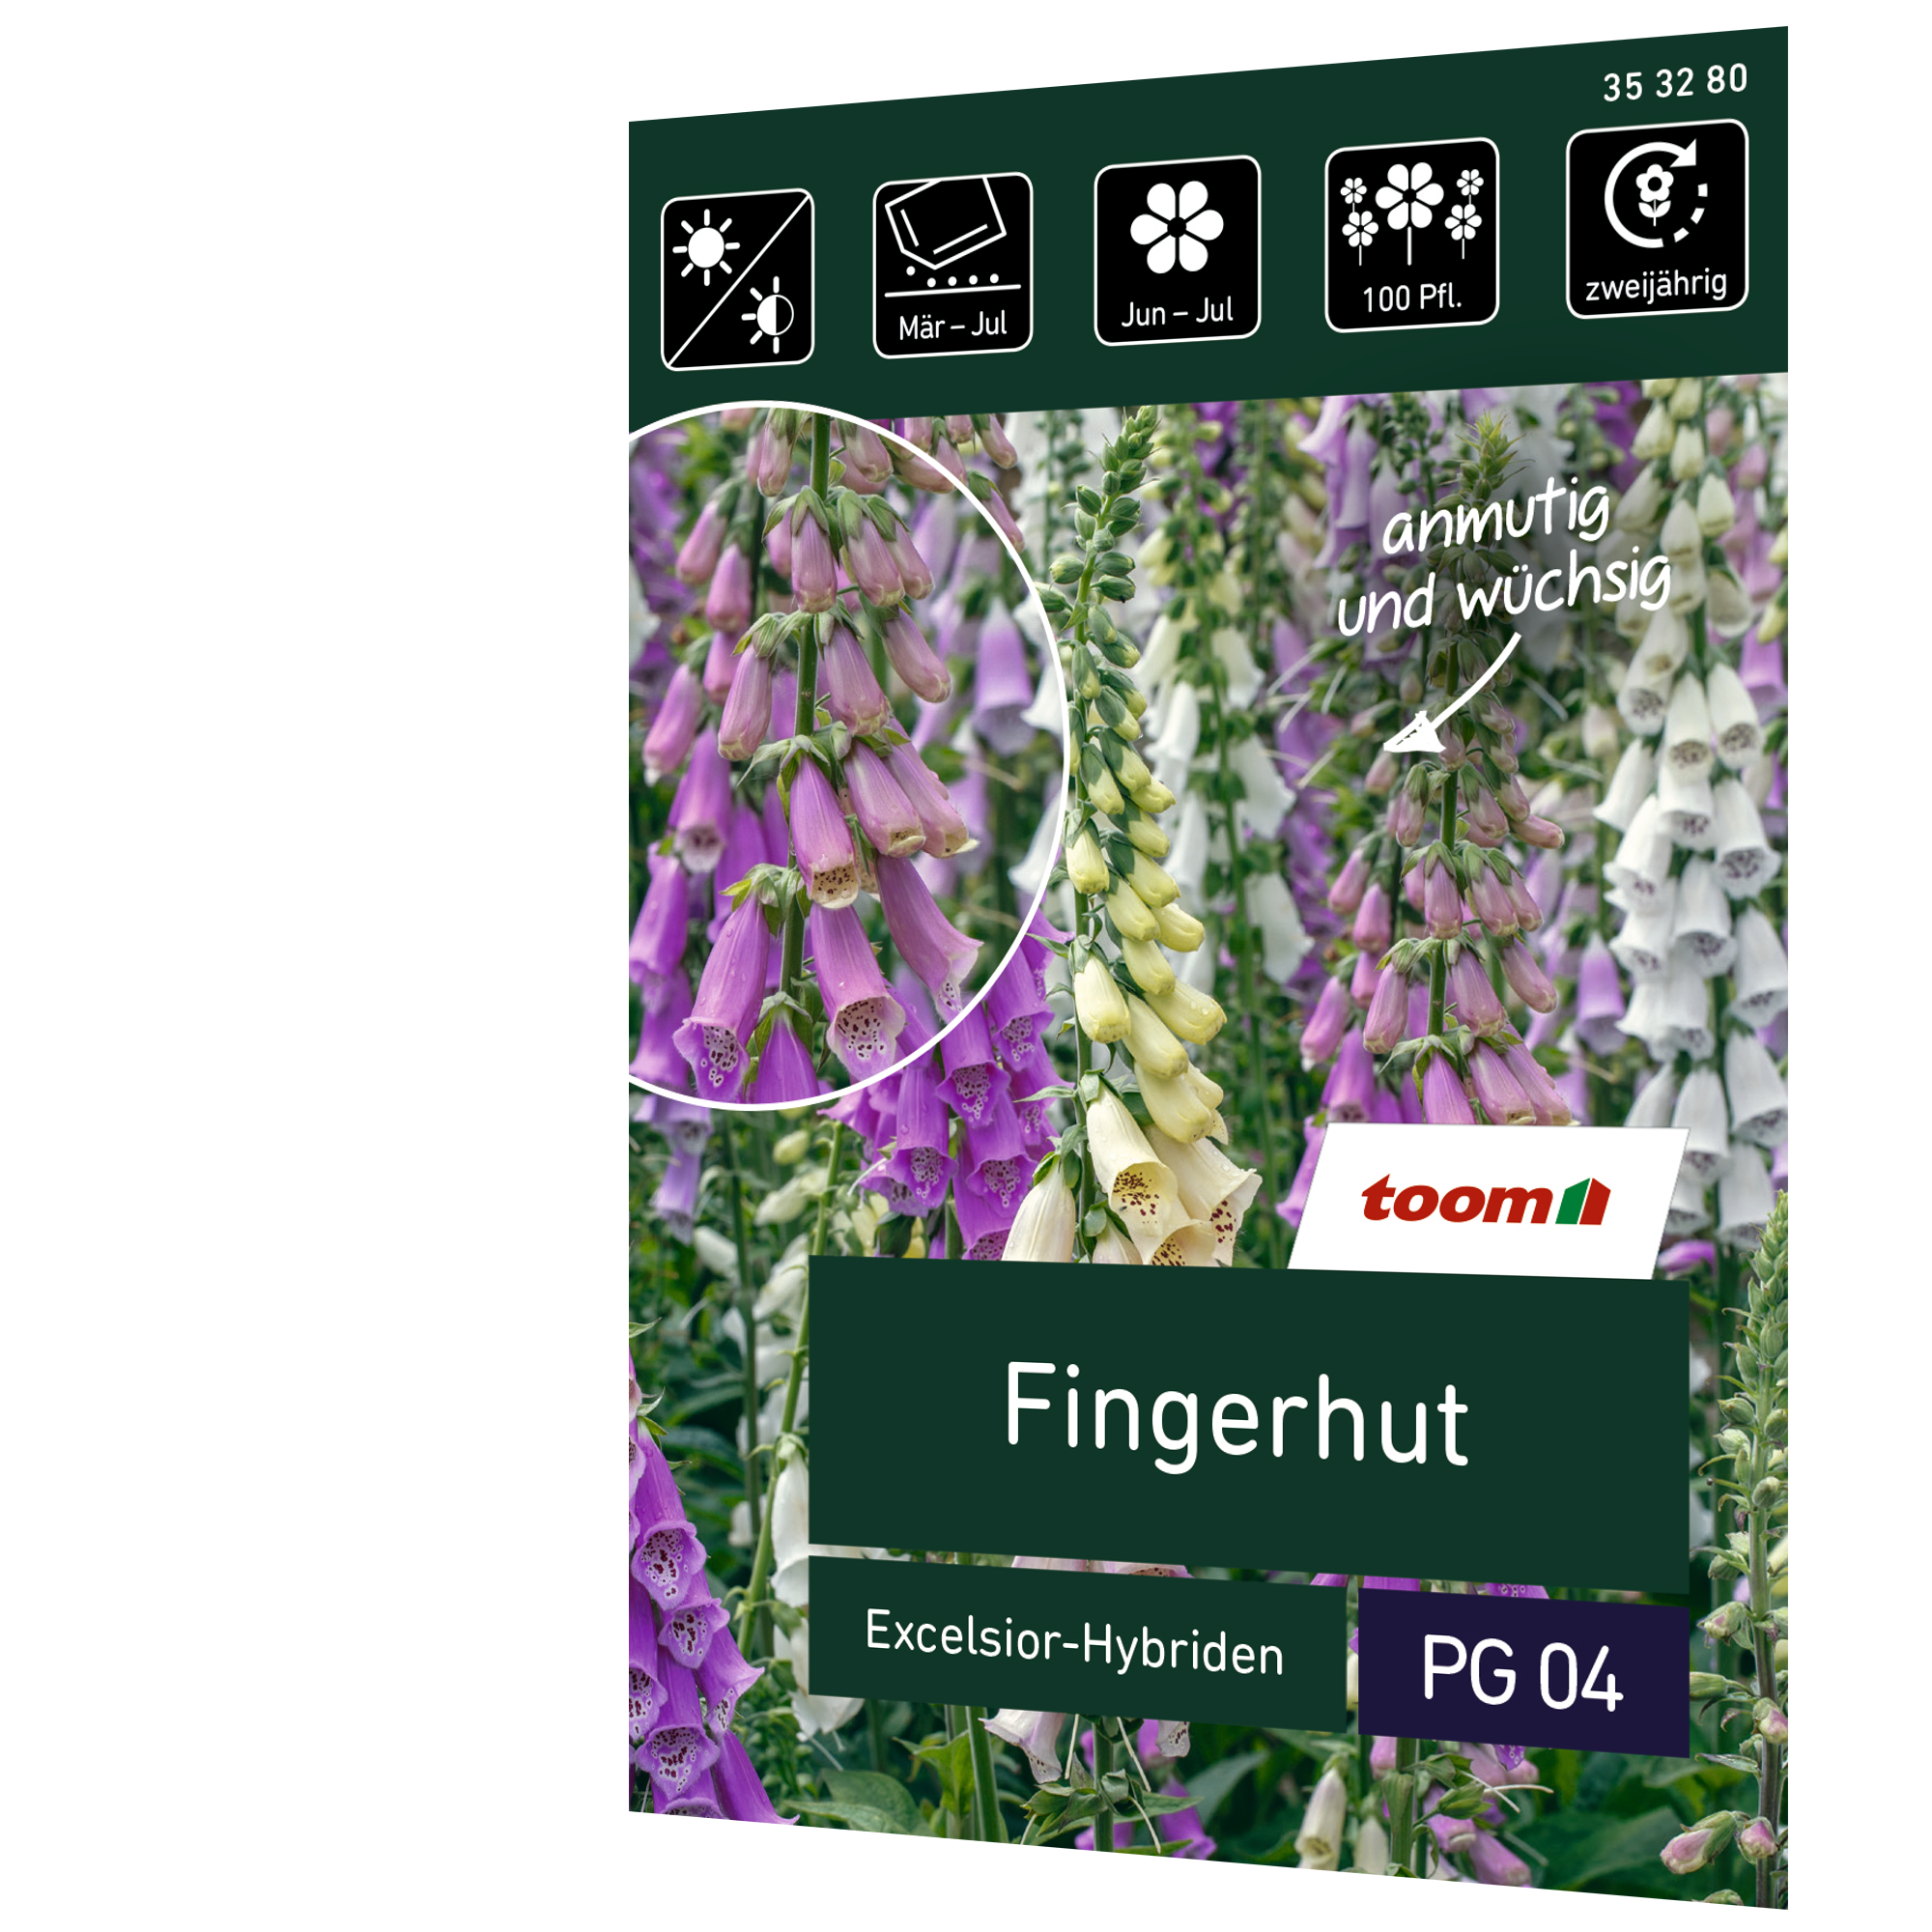 Fingerhut 'Excelsior-Hybriden' + product picture